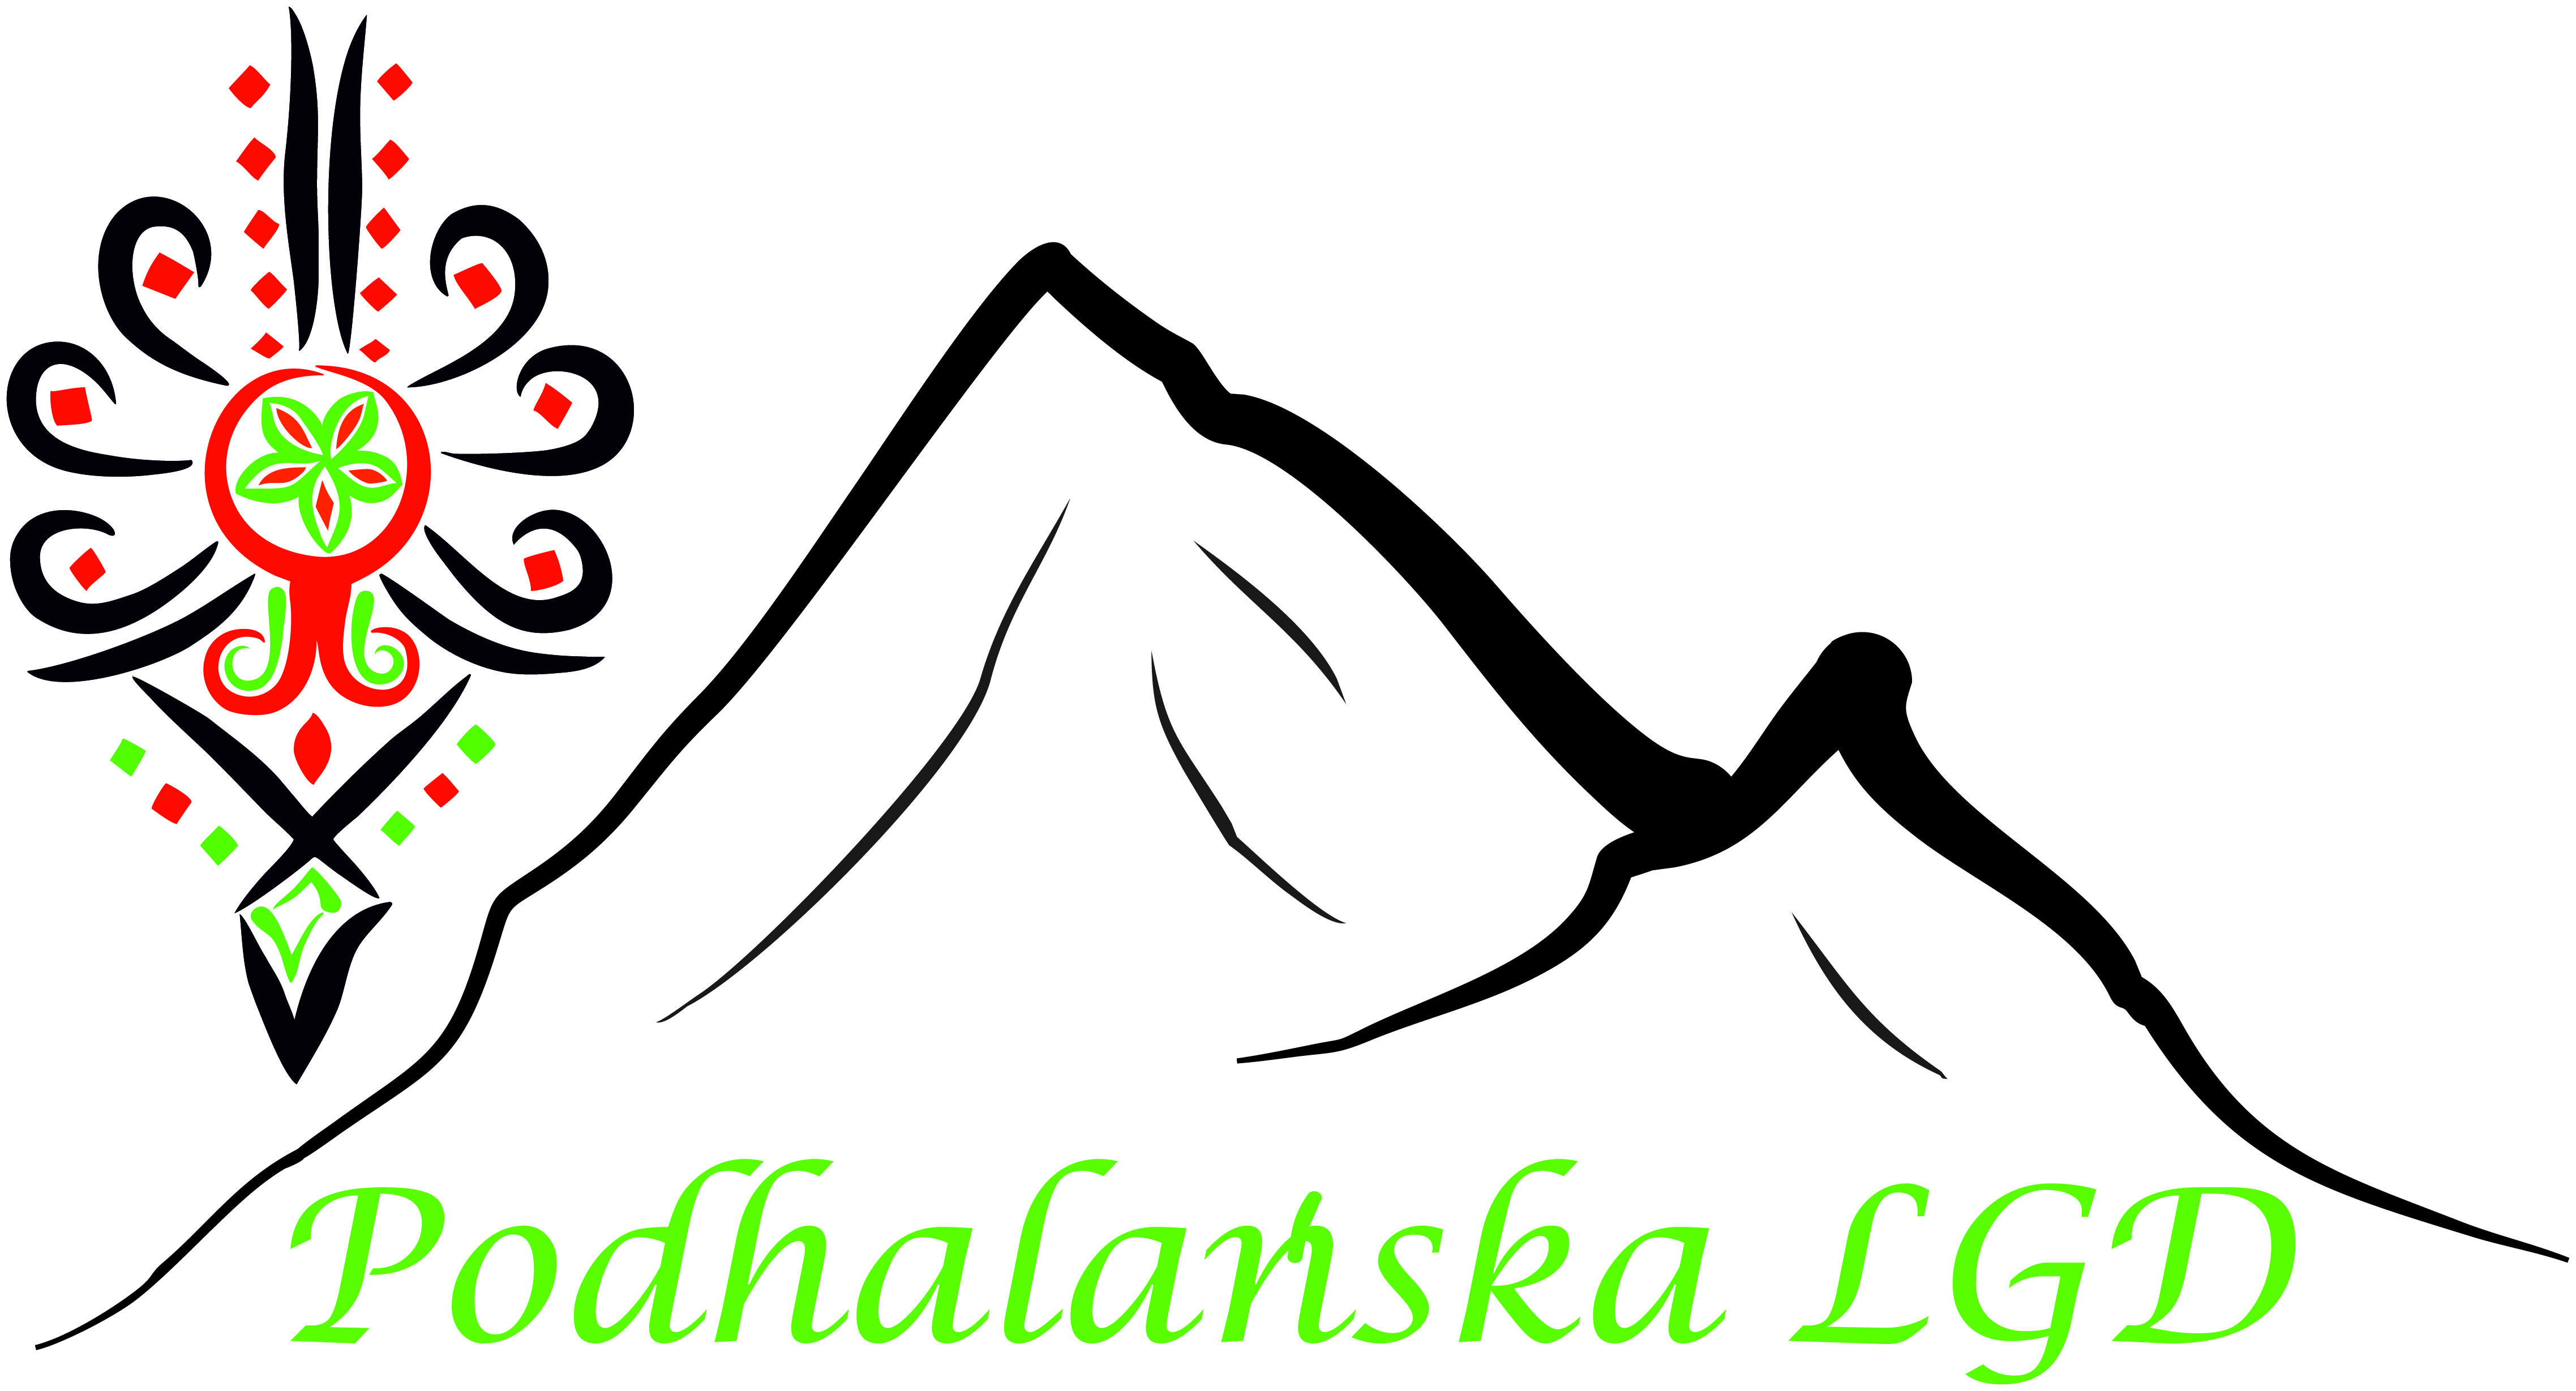 LGD Popdhalanska logo kolor